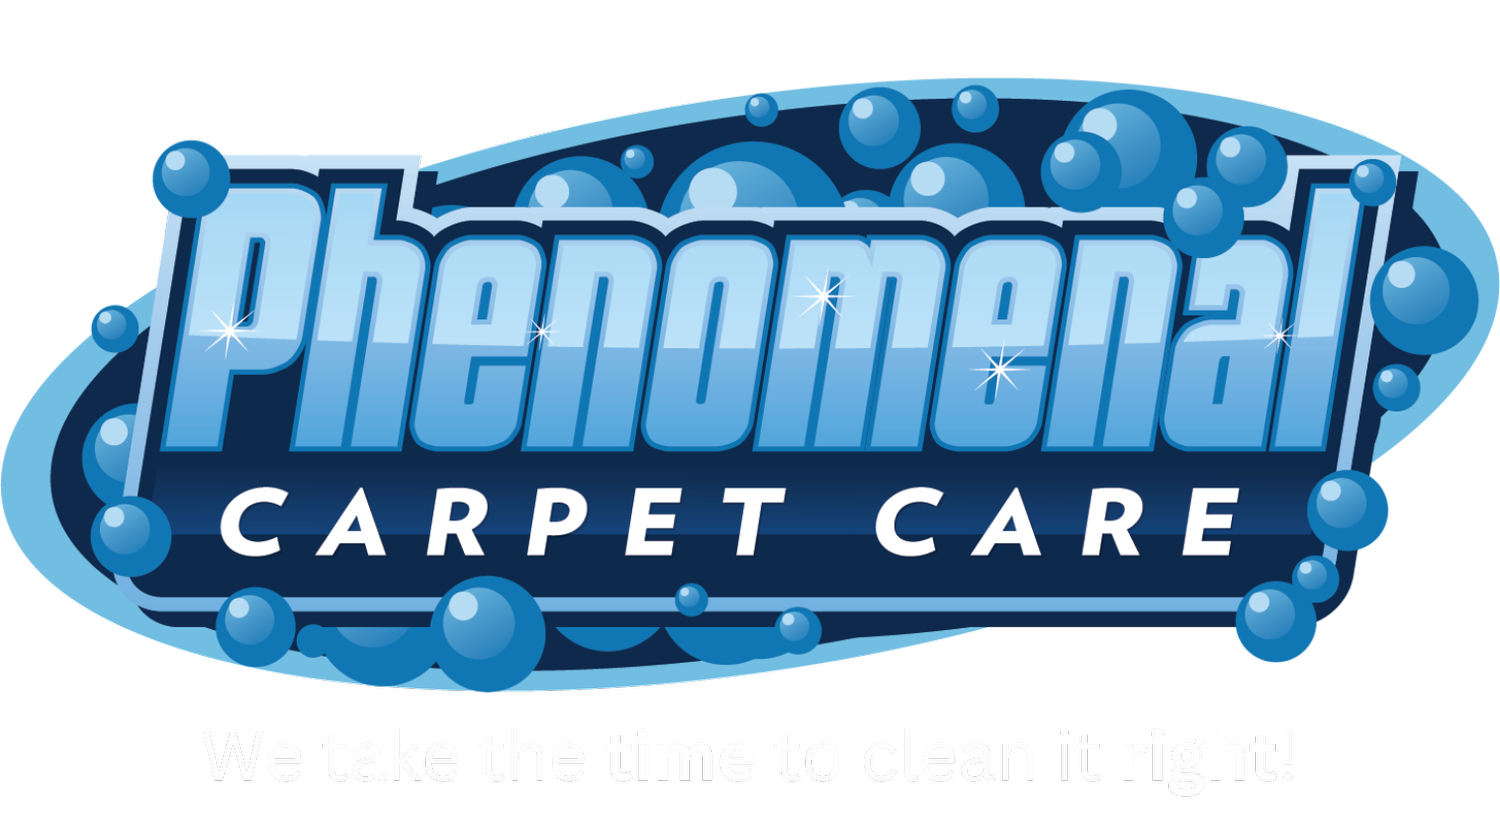 Phenomenal Carpet Care - Madison, WI